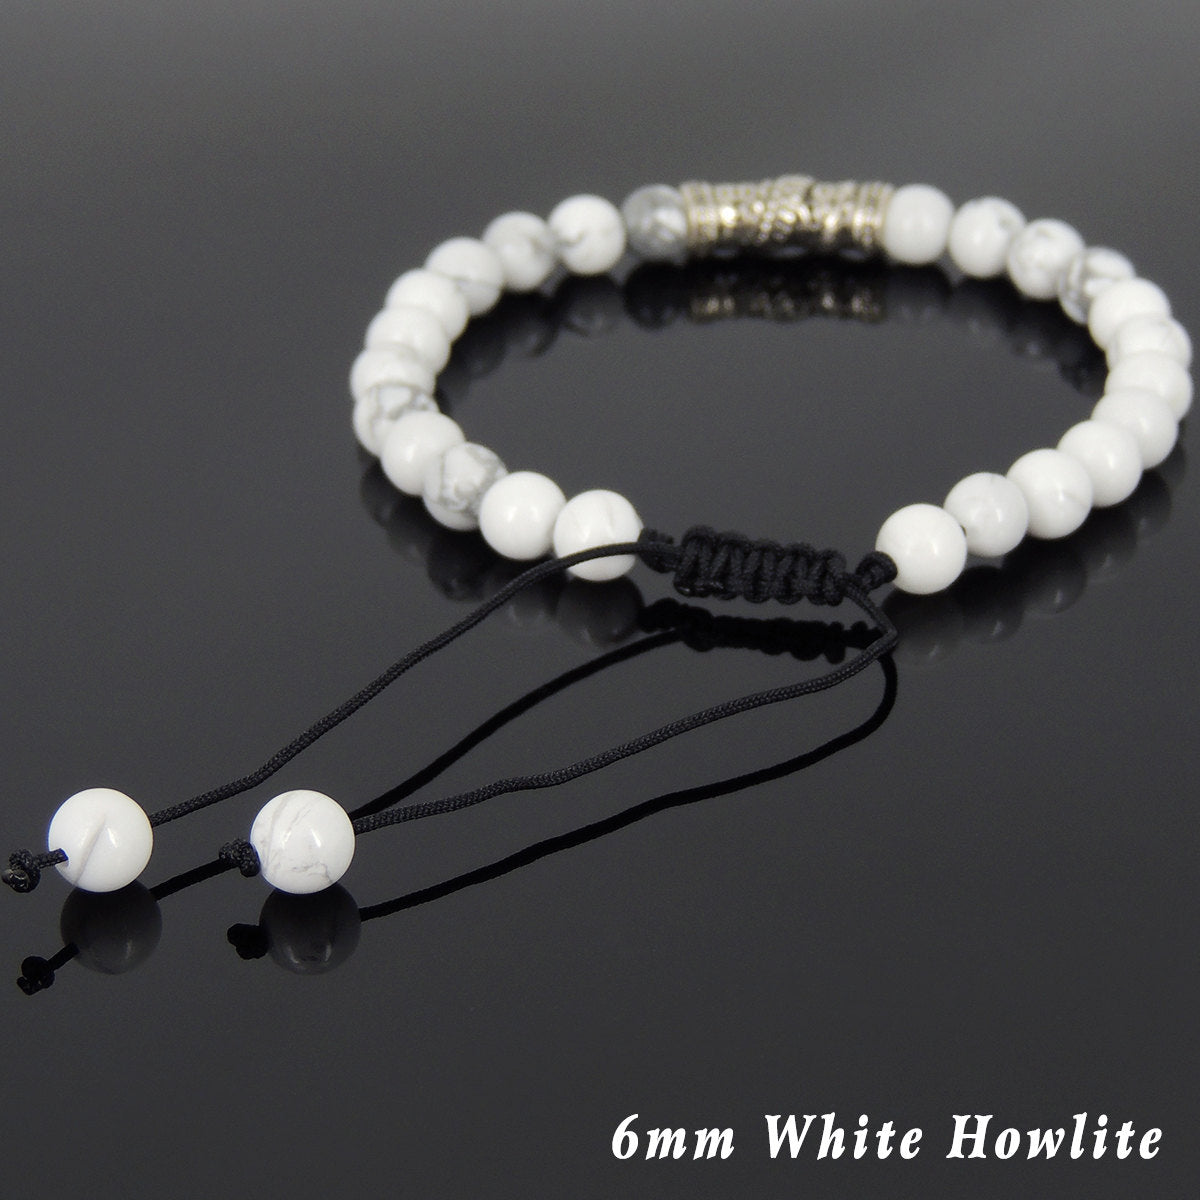 6mm White Howlite Adjustable Braided Gemstone Bracelet with S925 Sterling Silver Dragon Charm - Handmade by Gem & Silver BR791